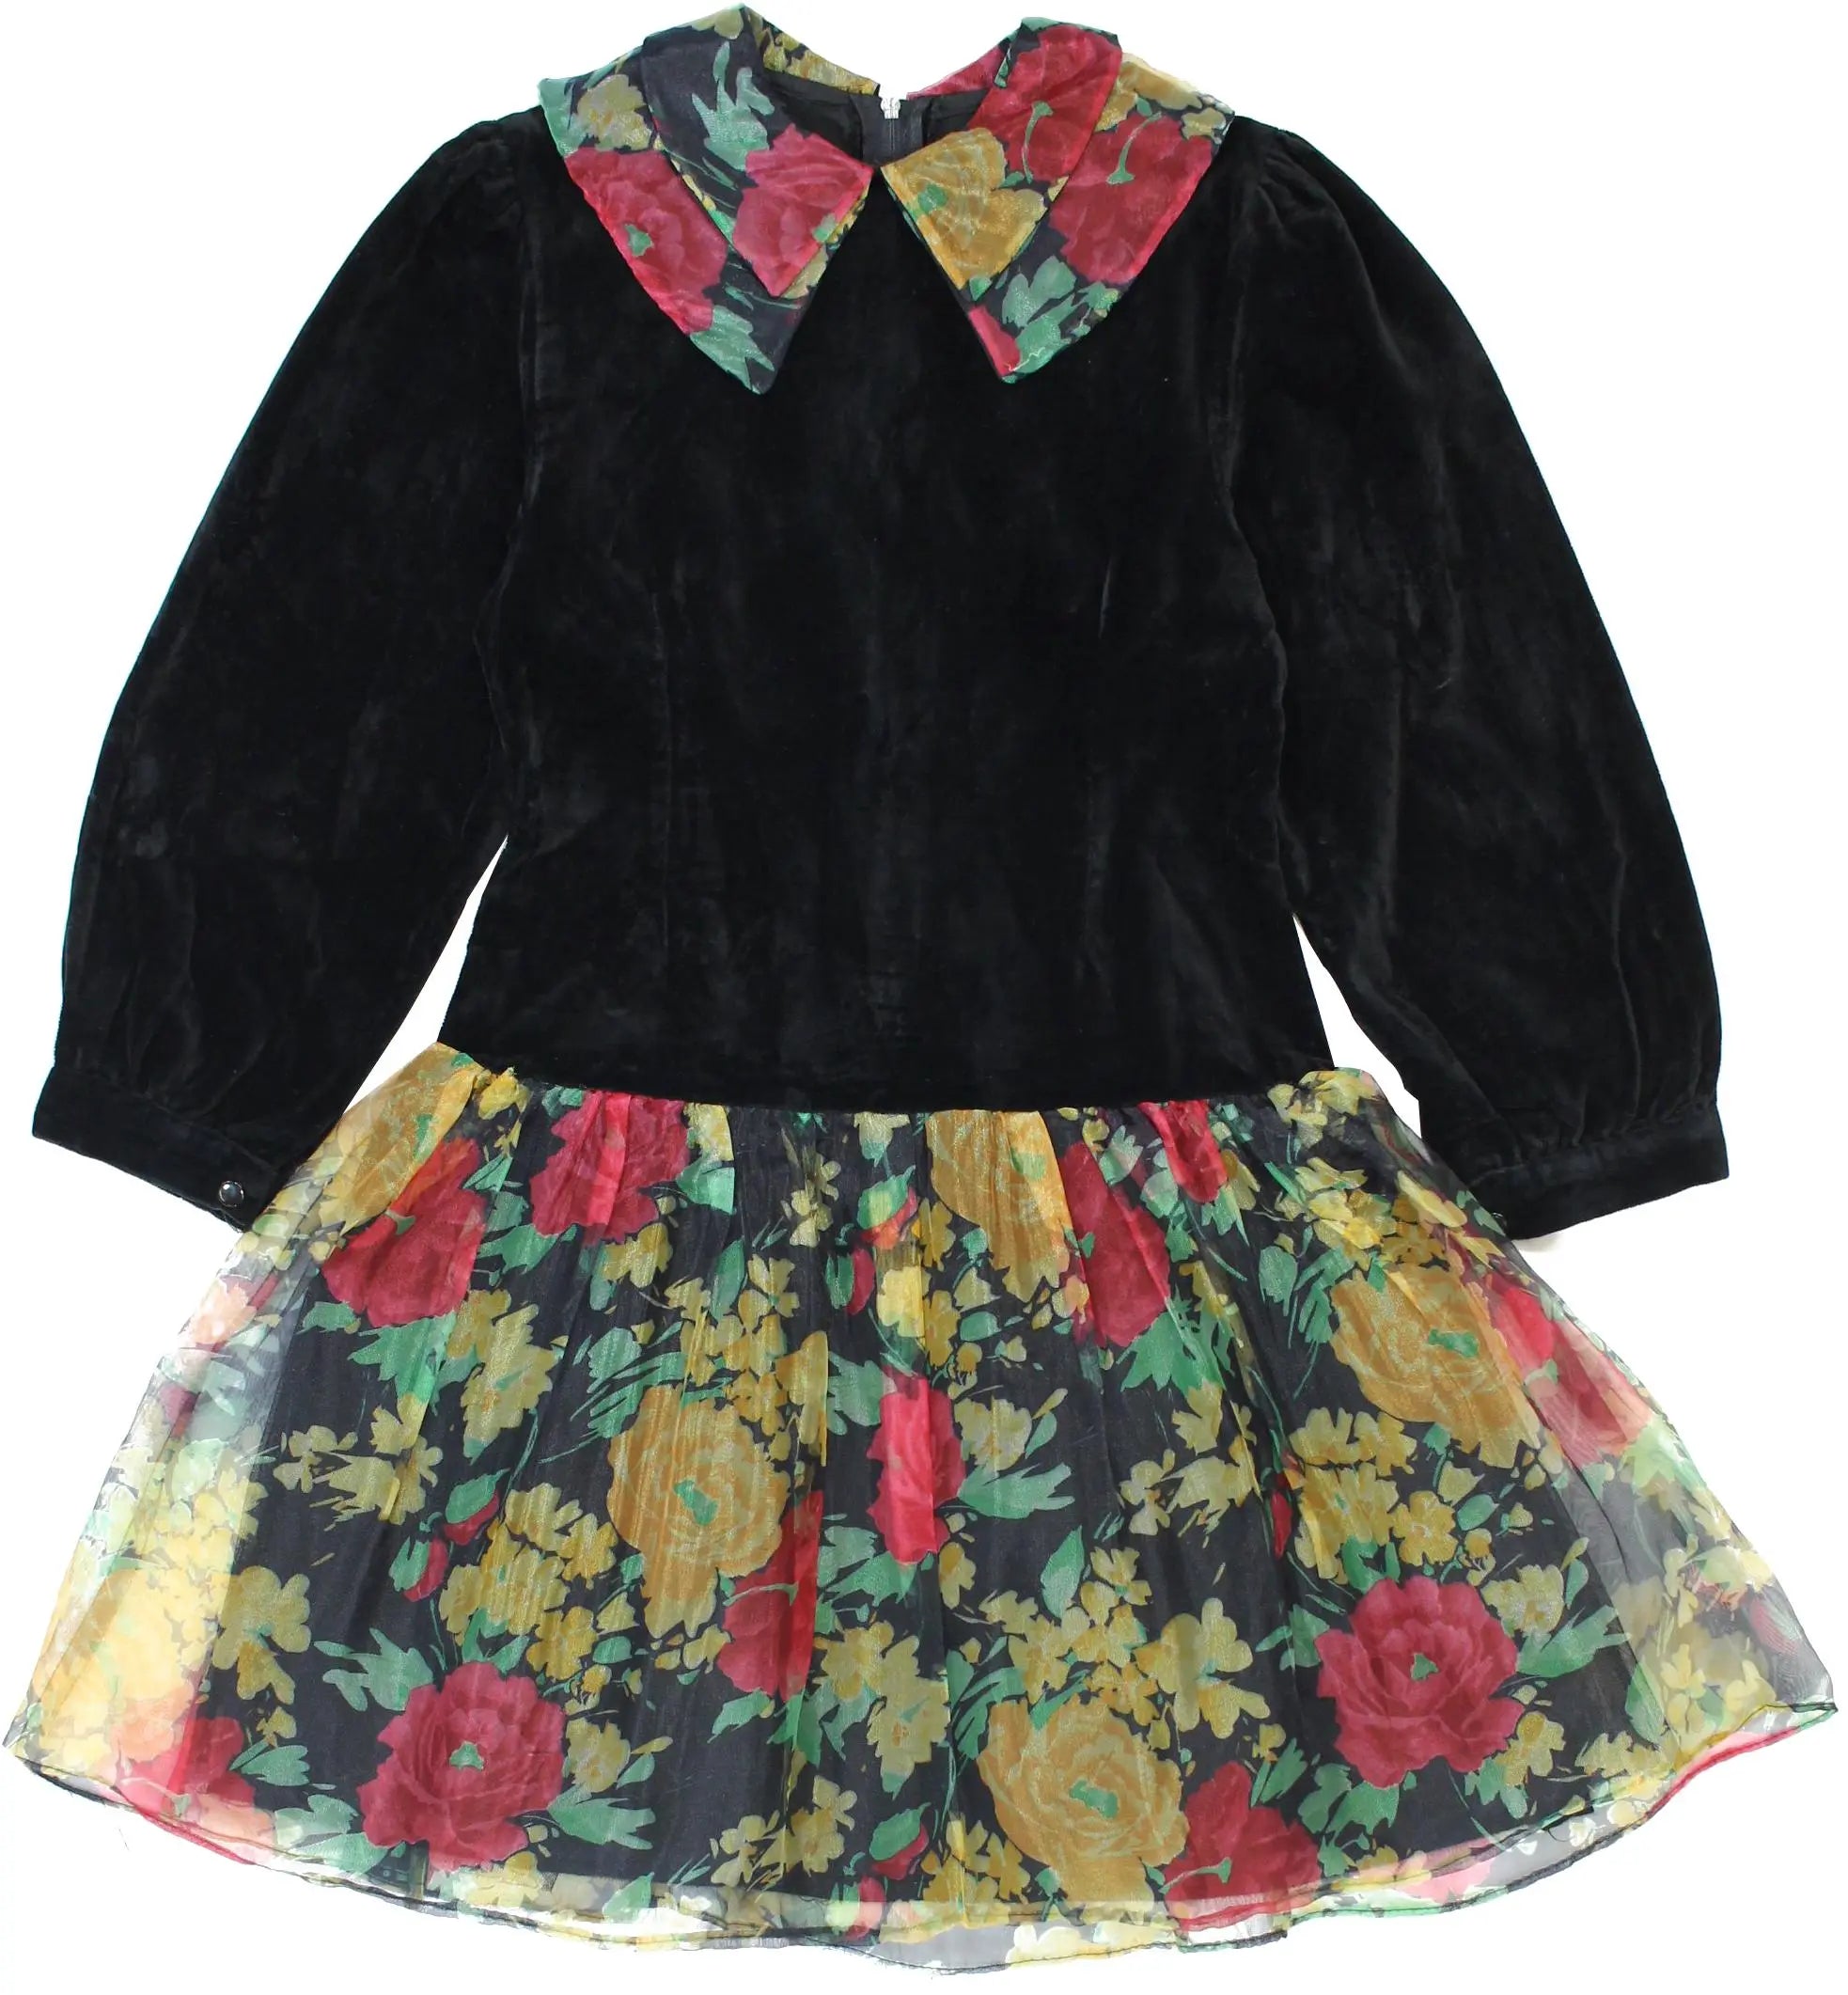 Vanna - Black Velvet Dress- ThriftTale.com - Vintage and second handclothing